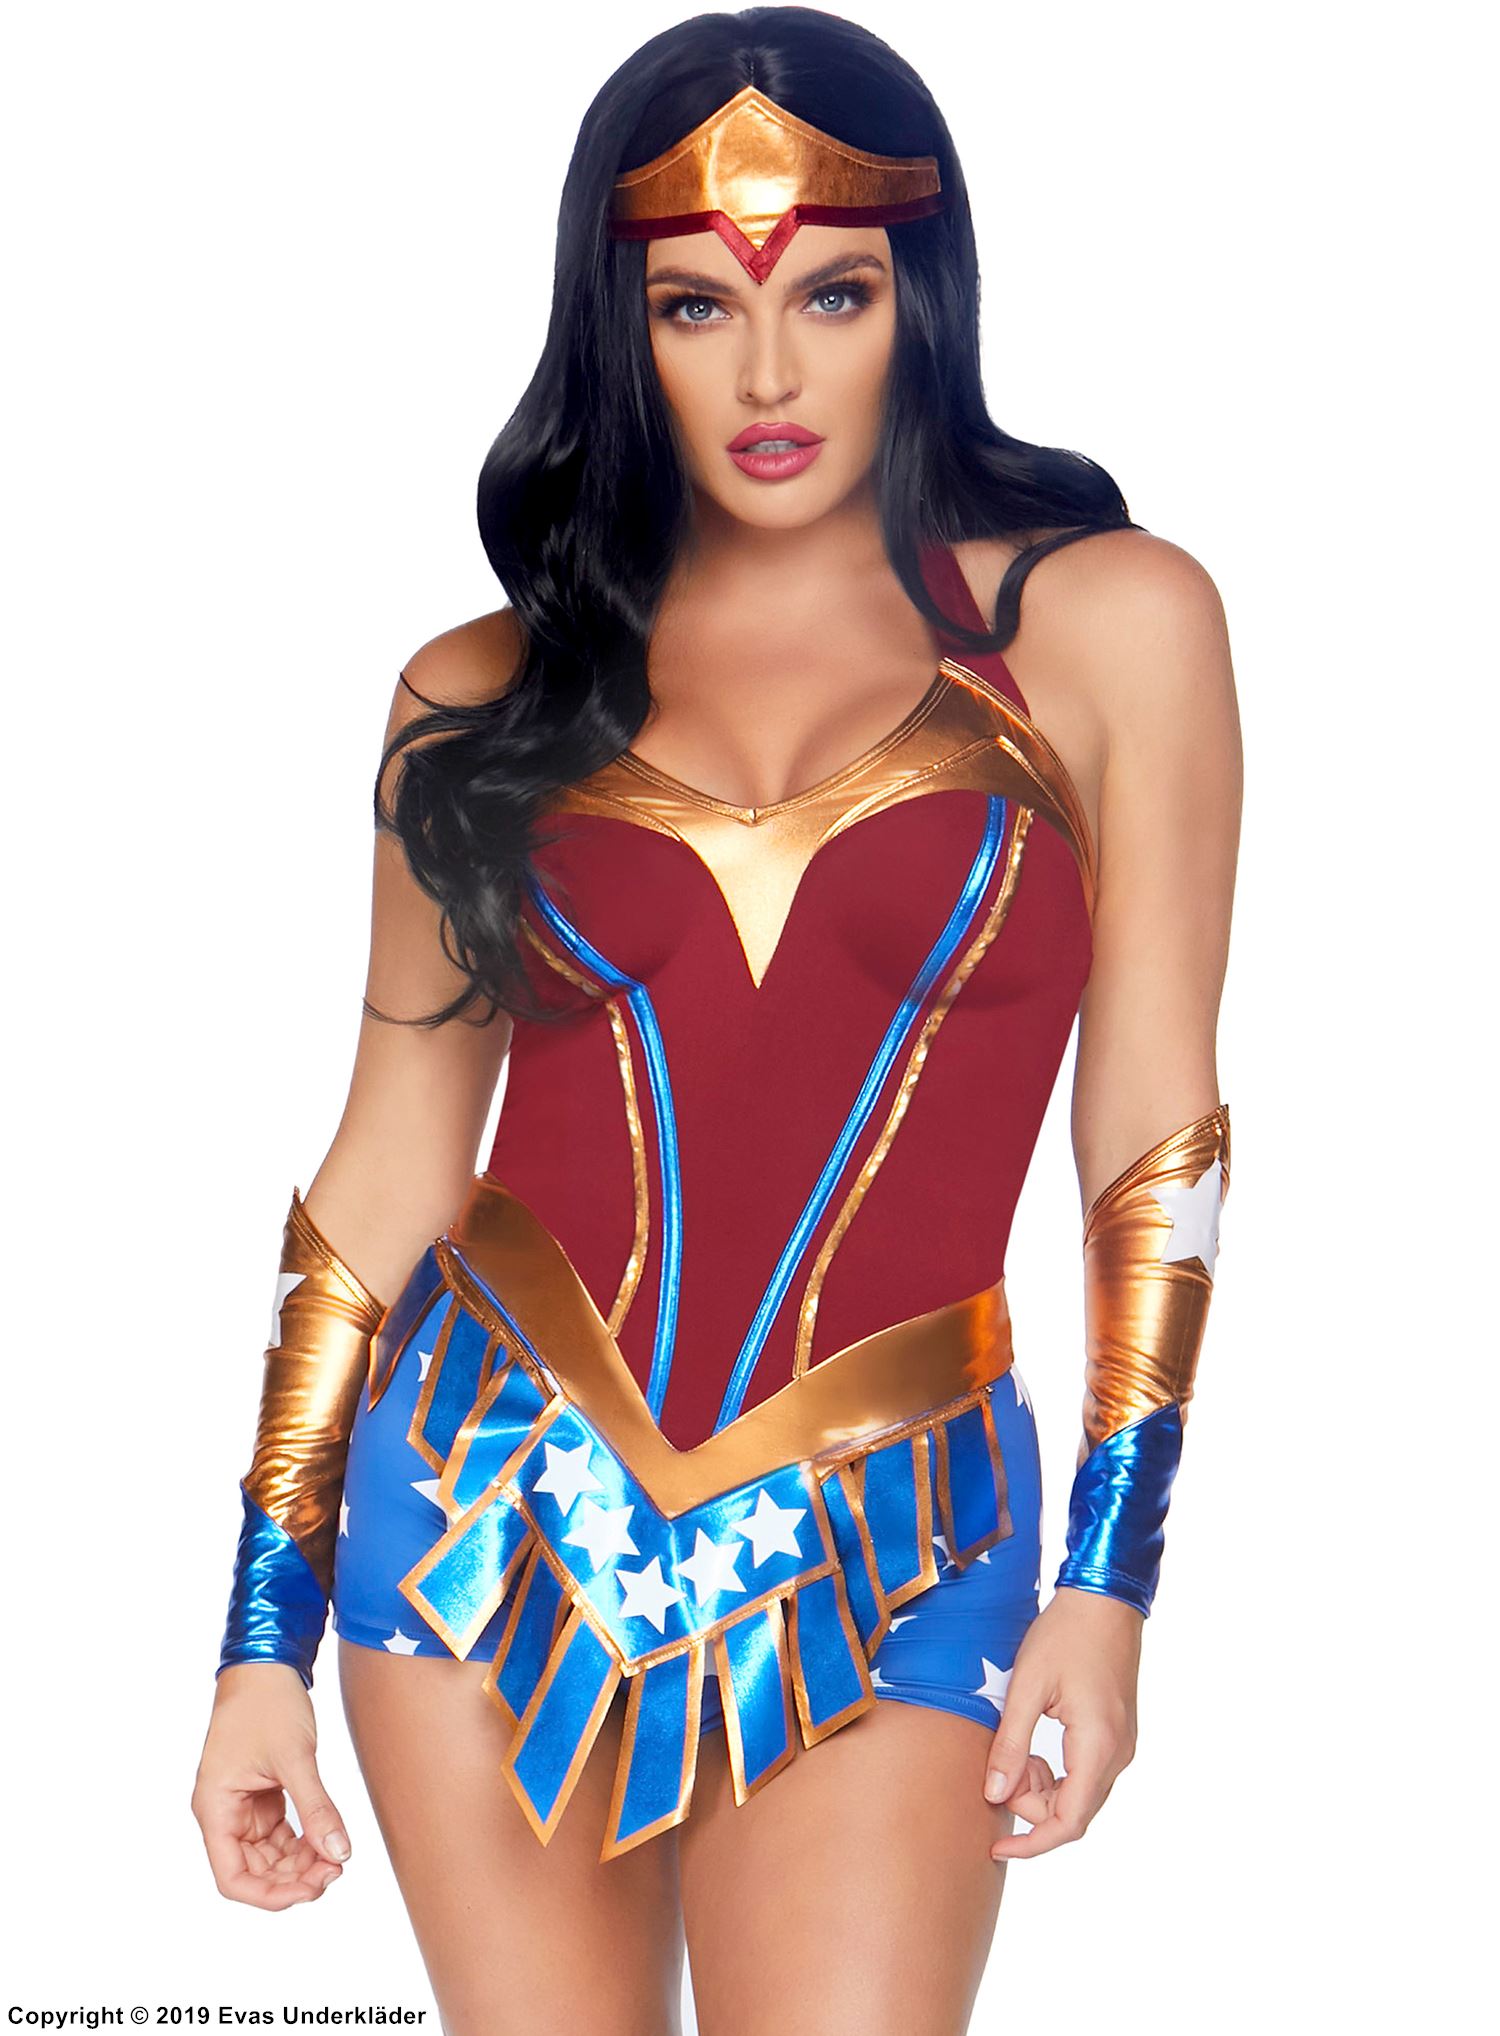 Wonder Woman, kostyme-romper, matchende tilbehør